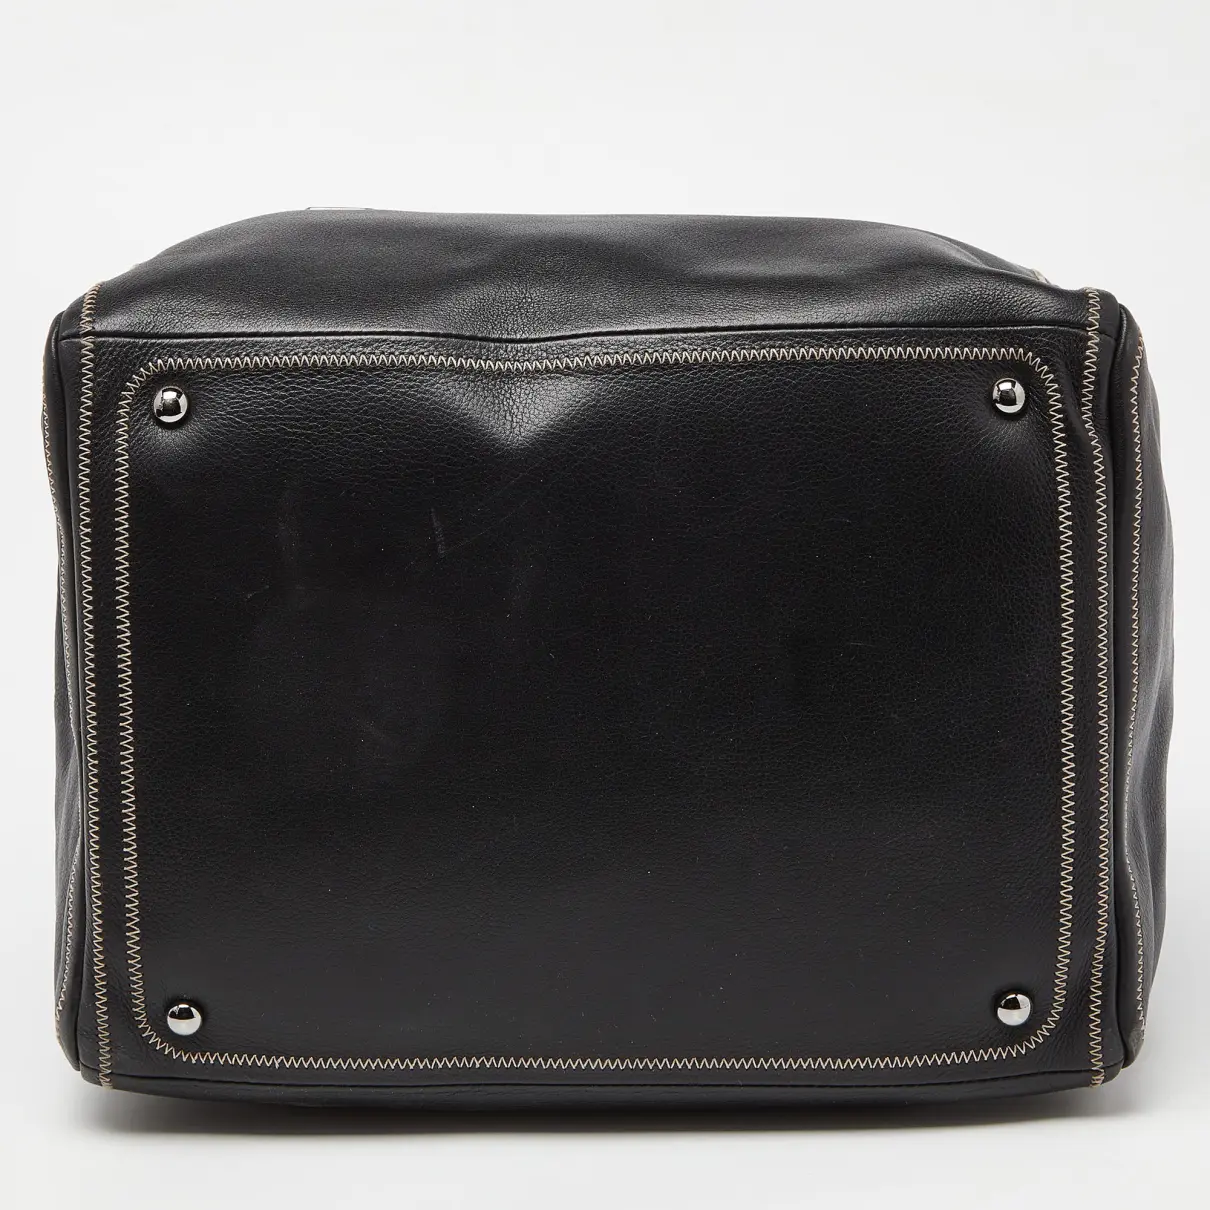 Leather satchel Chanel